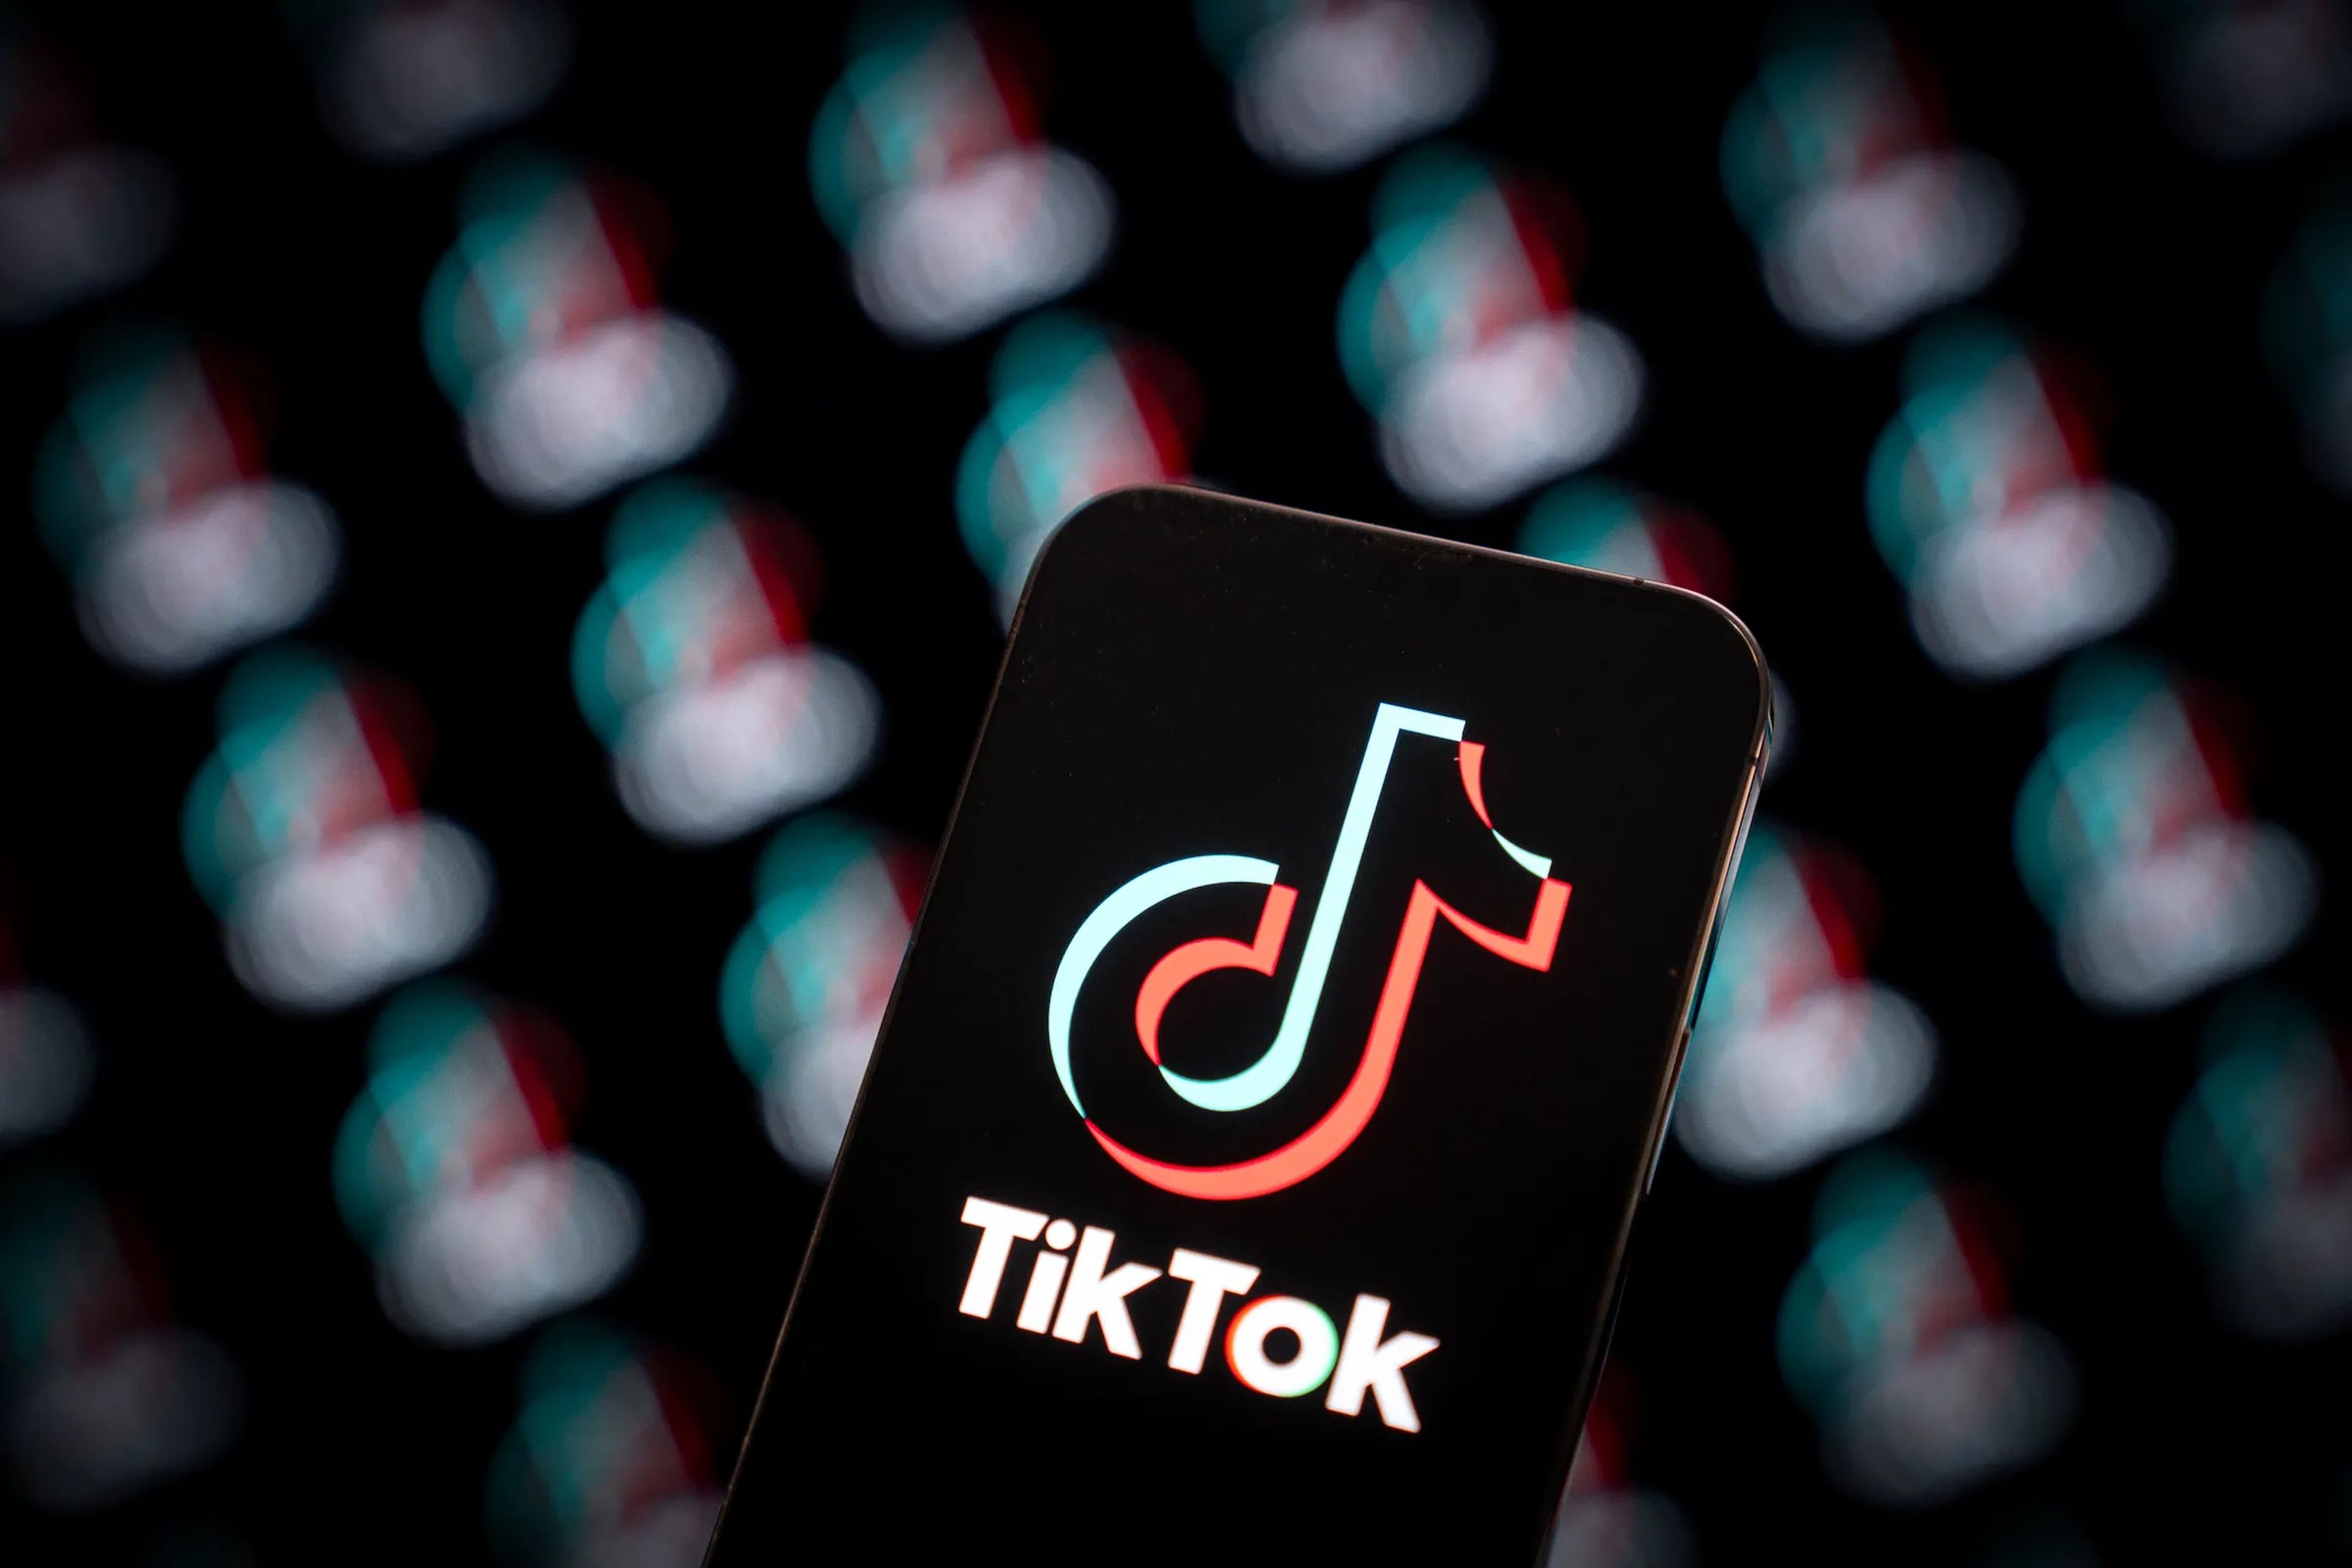 El logo de TikTok en la pantalla de un teléfono móvil.